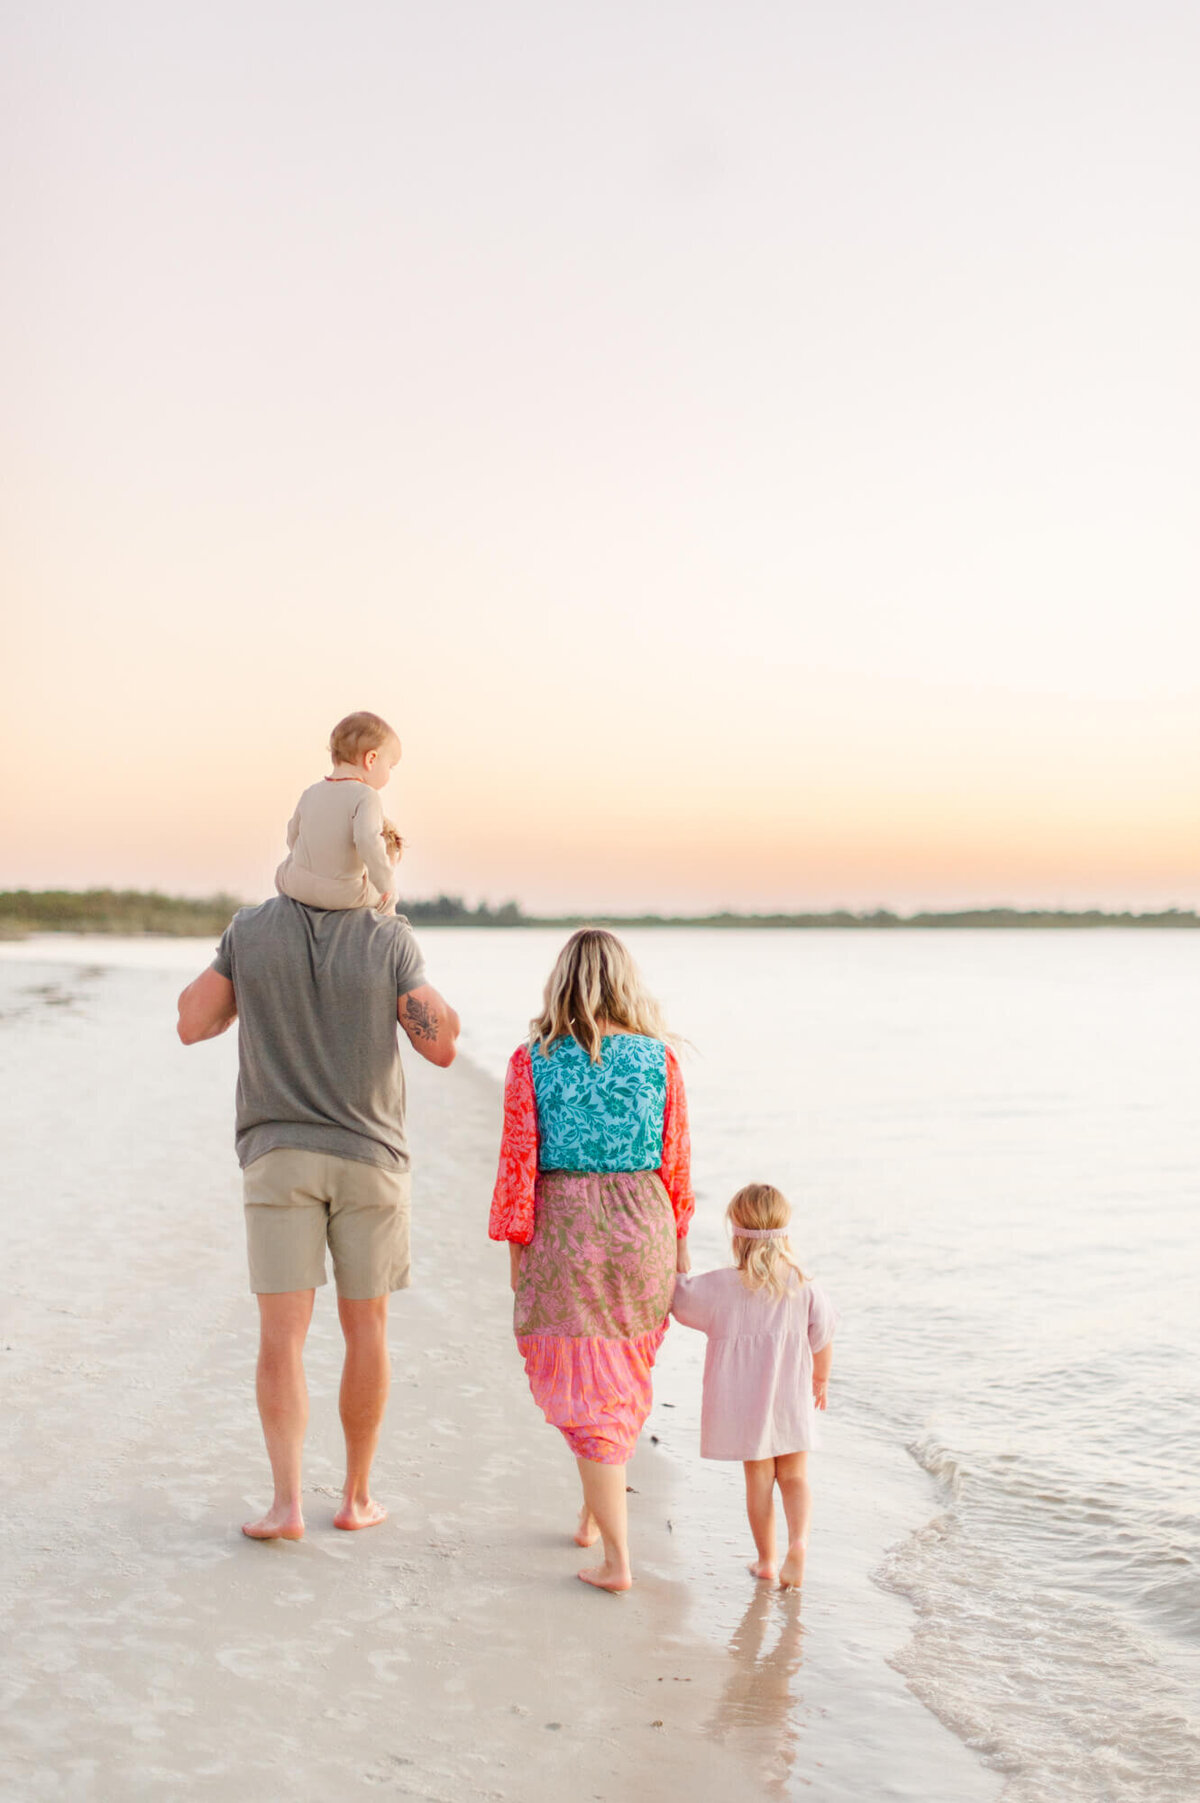 Beautiful sunset image of family walking near the shoreline at New Smryna Dunes Park